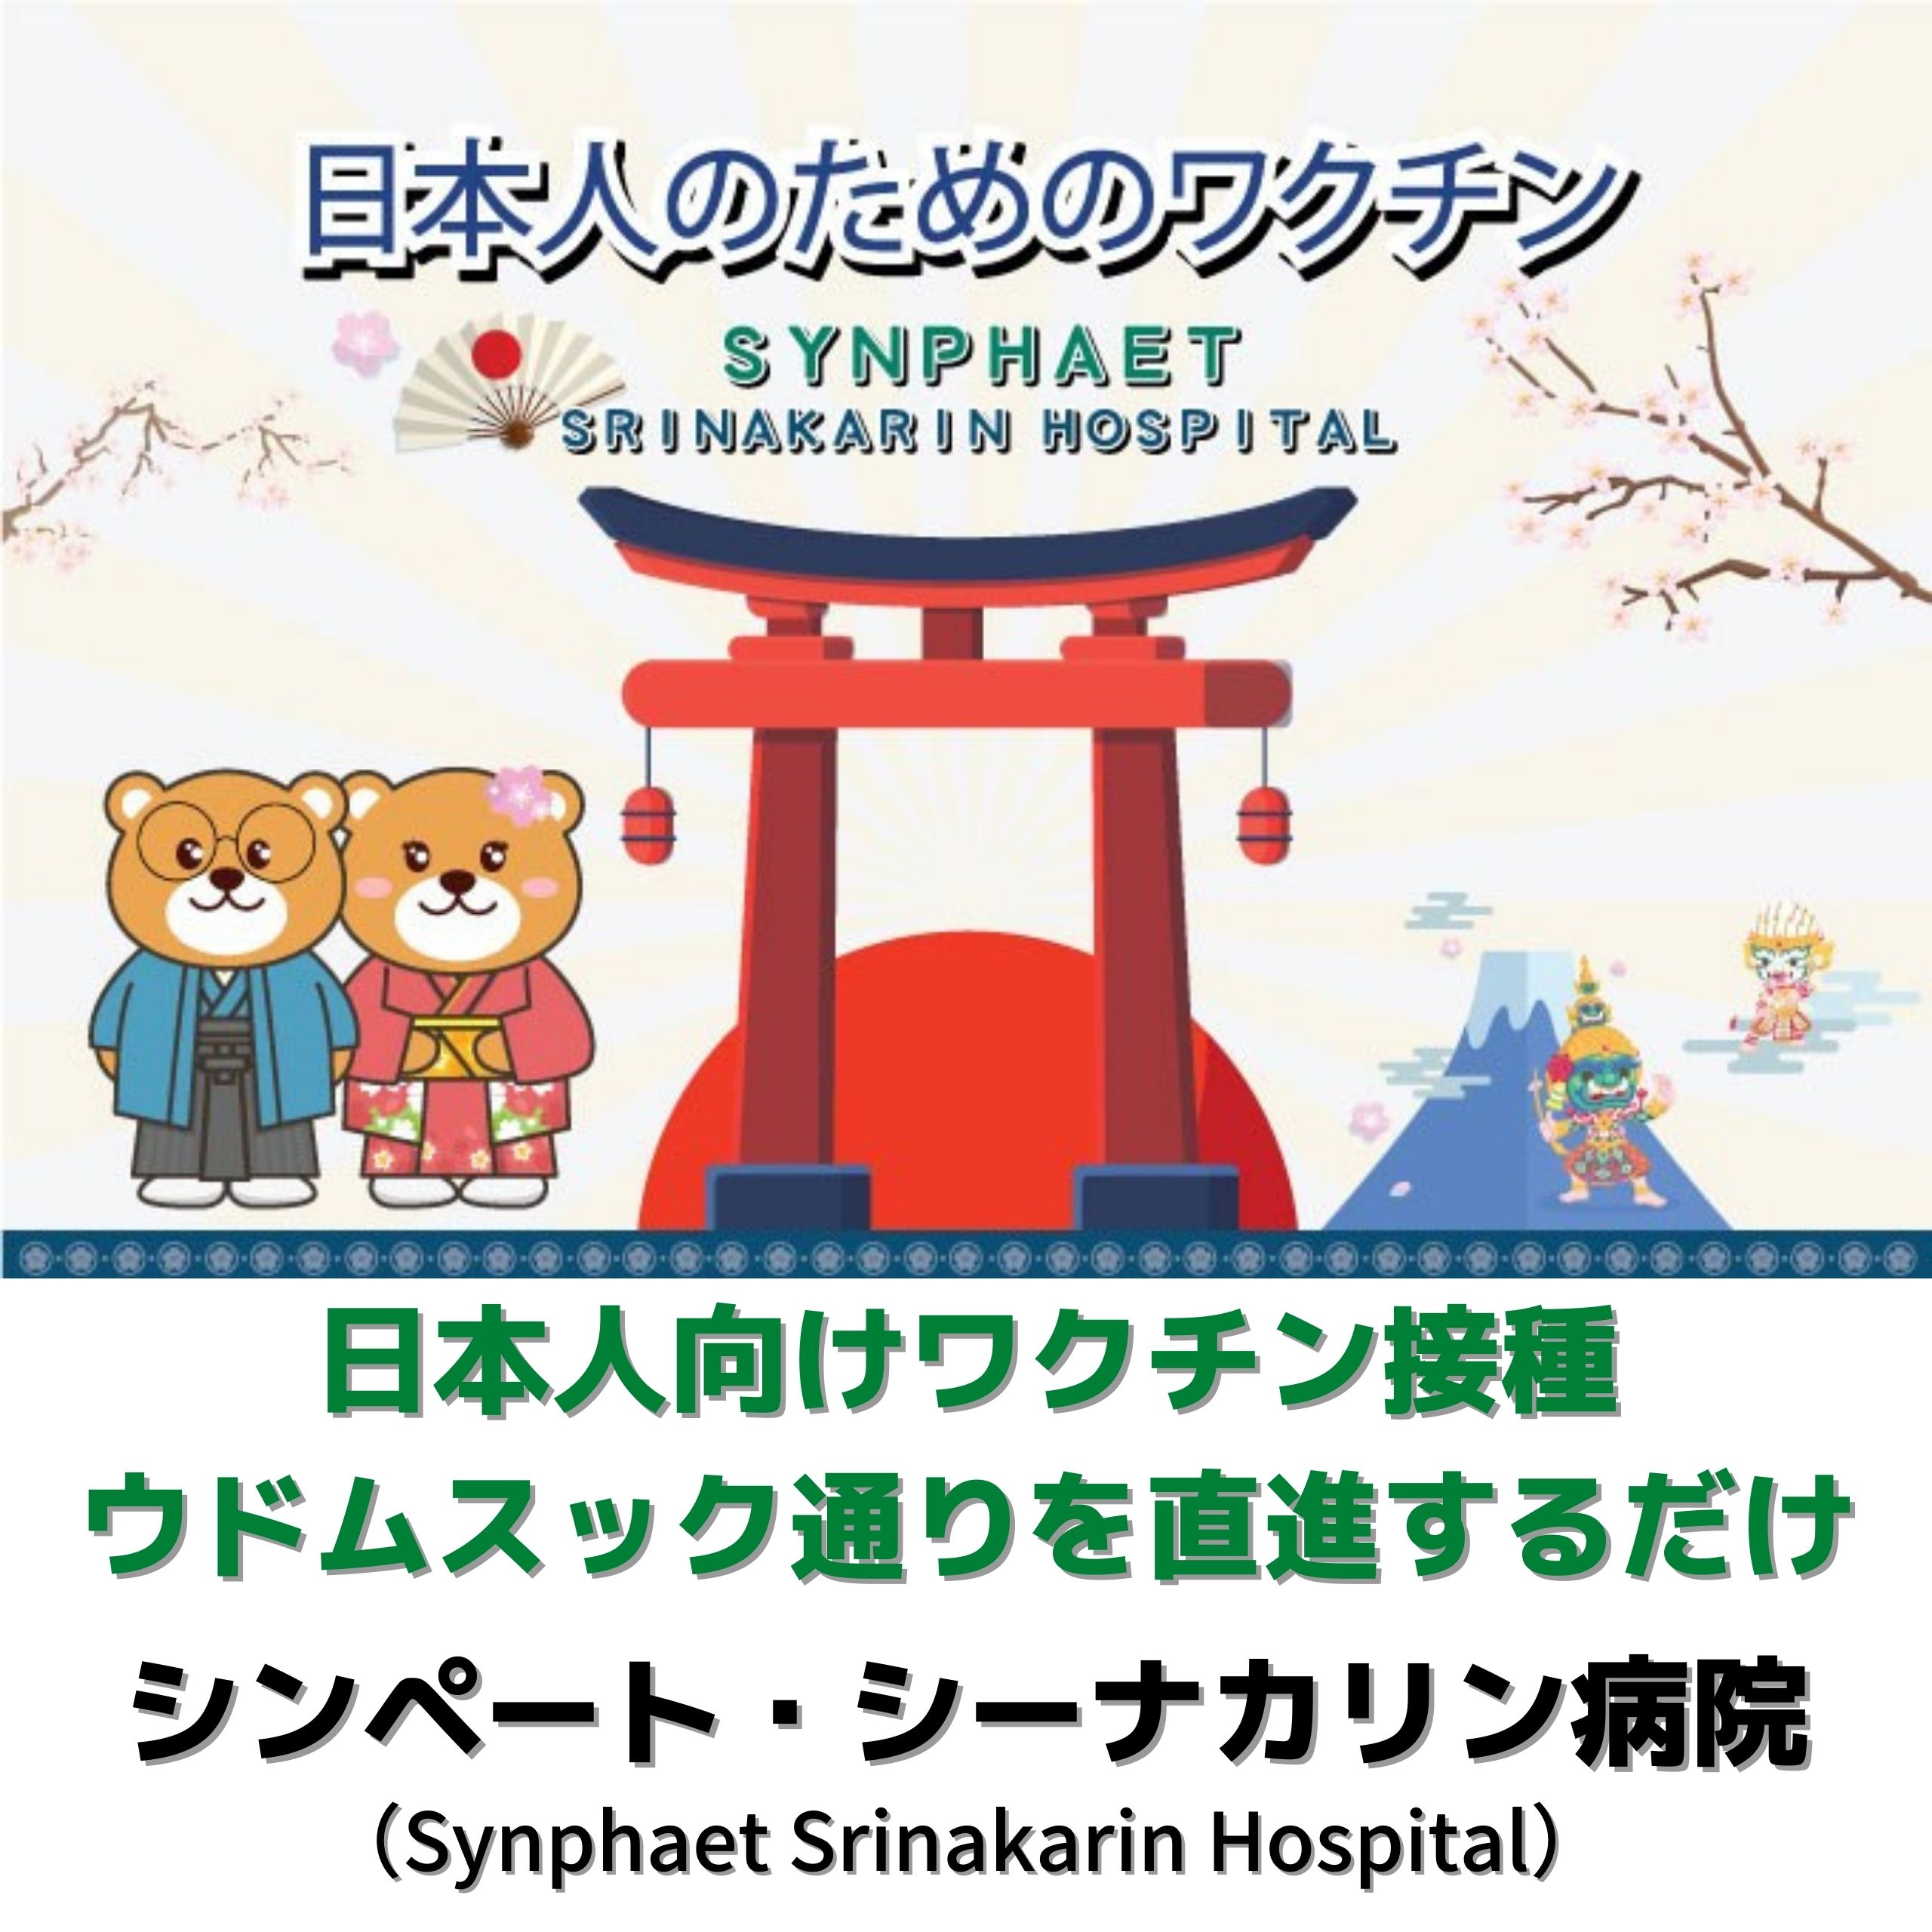 Synphaet Srinakarin Hospital,シンペート・シーナカリン病院,タイ,バンコク,病院,日本人,コロナ,ワクチン,行き方,地図